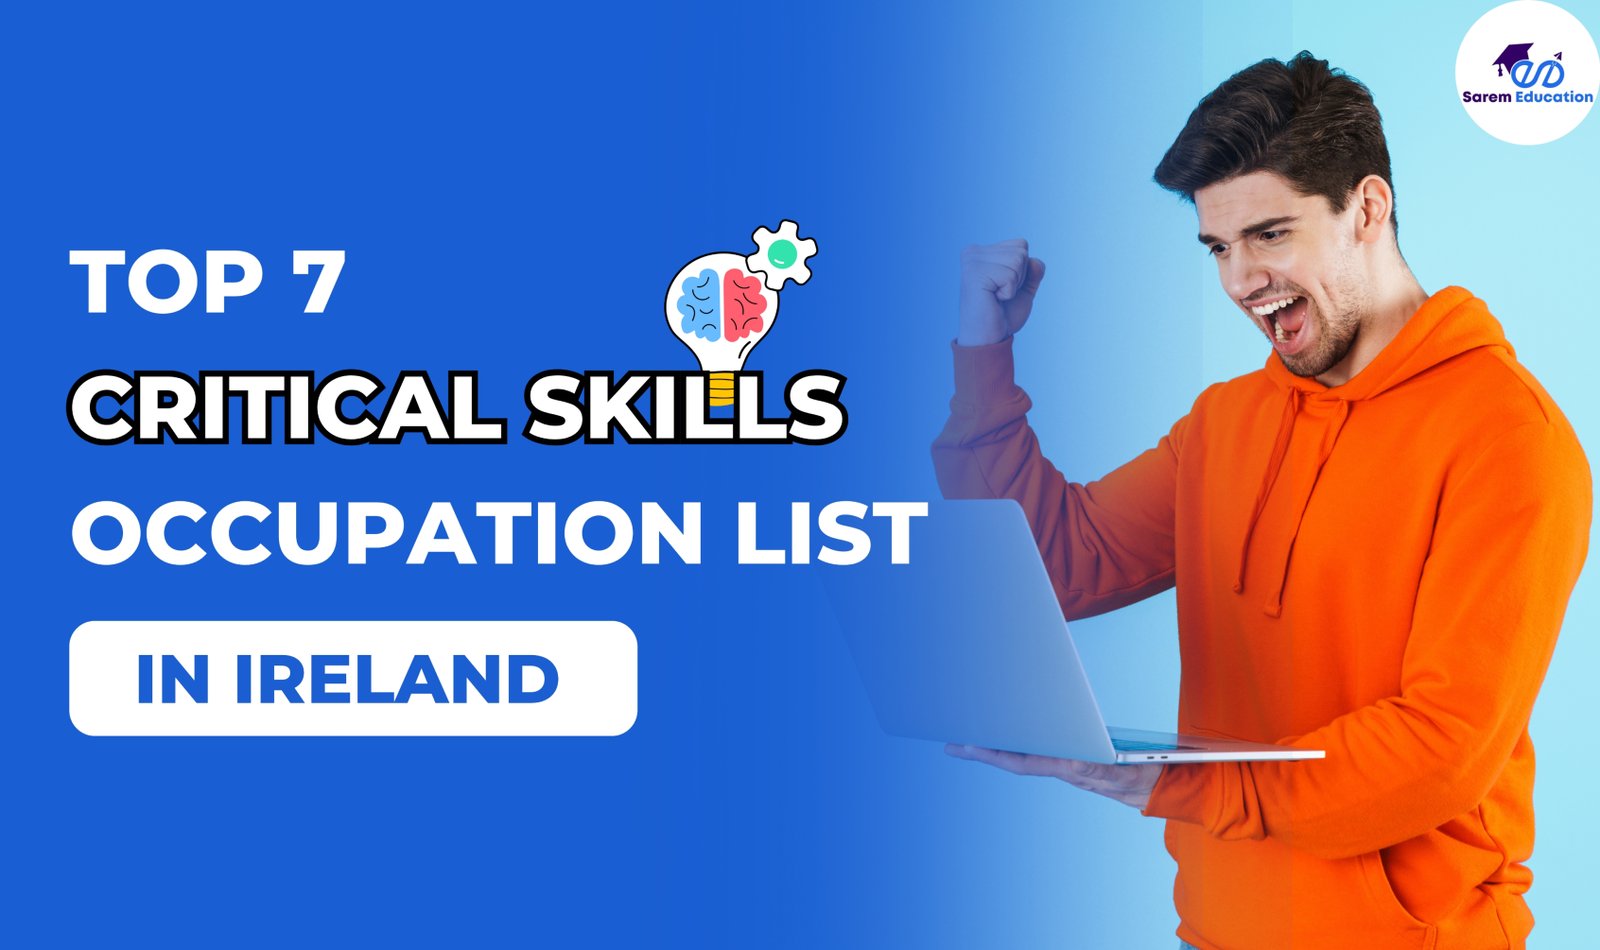 Top 7 Critical Skills Occupation List in Ireland